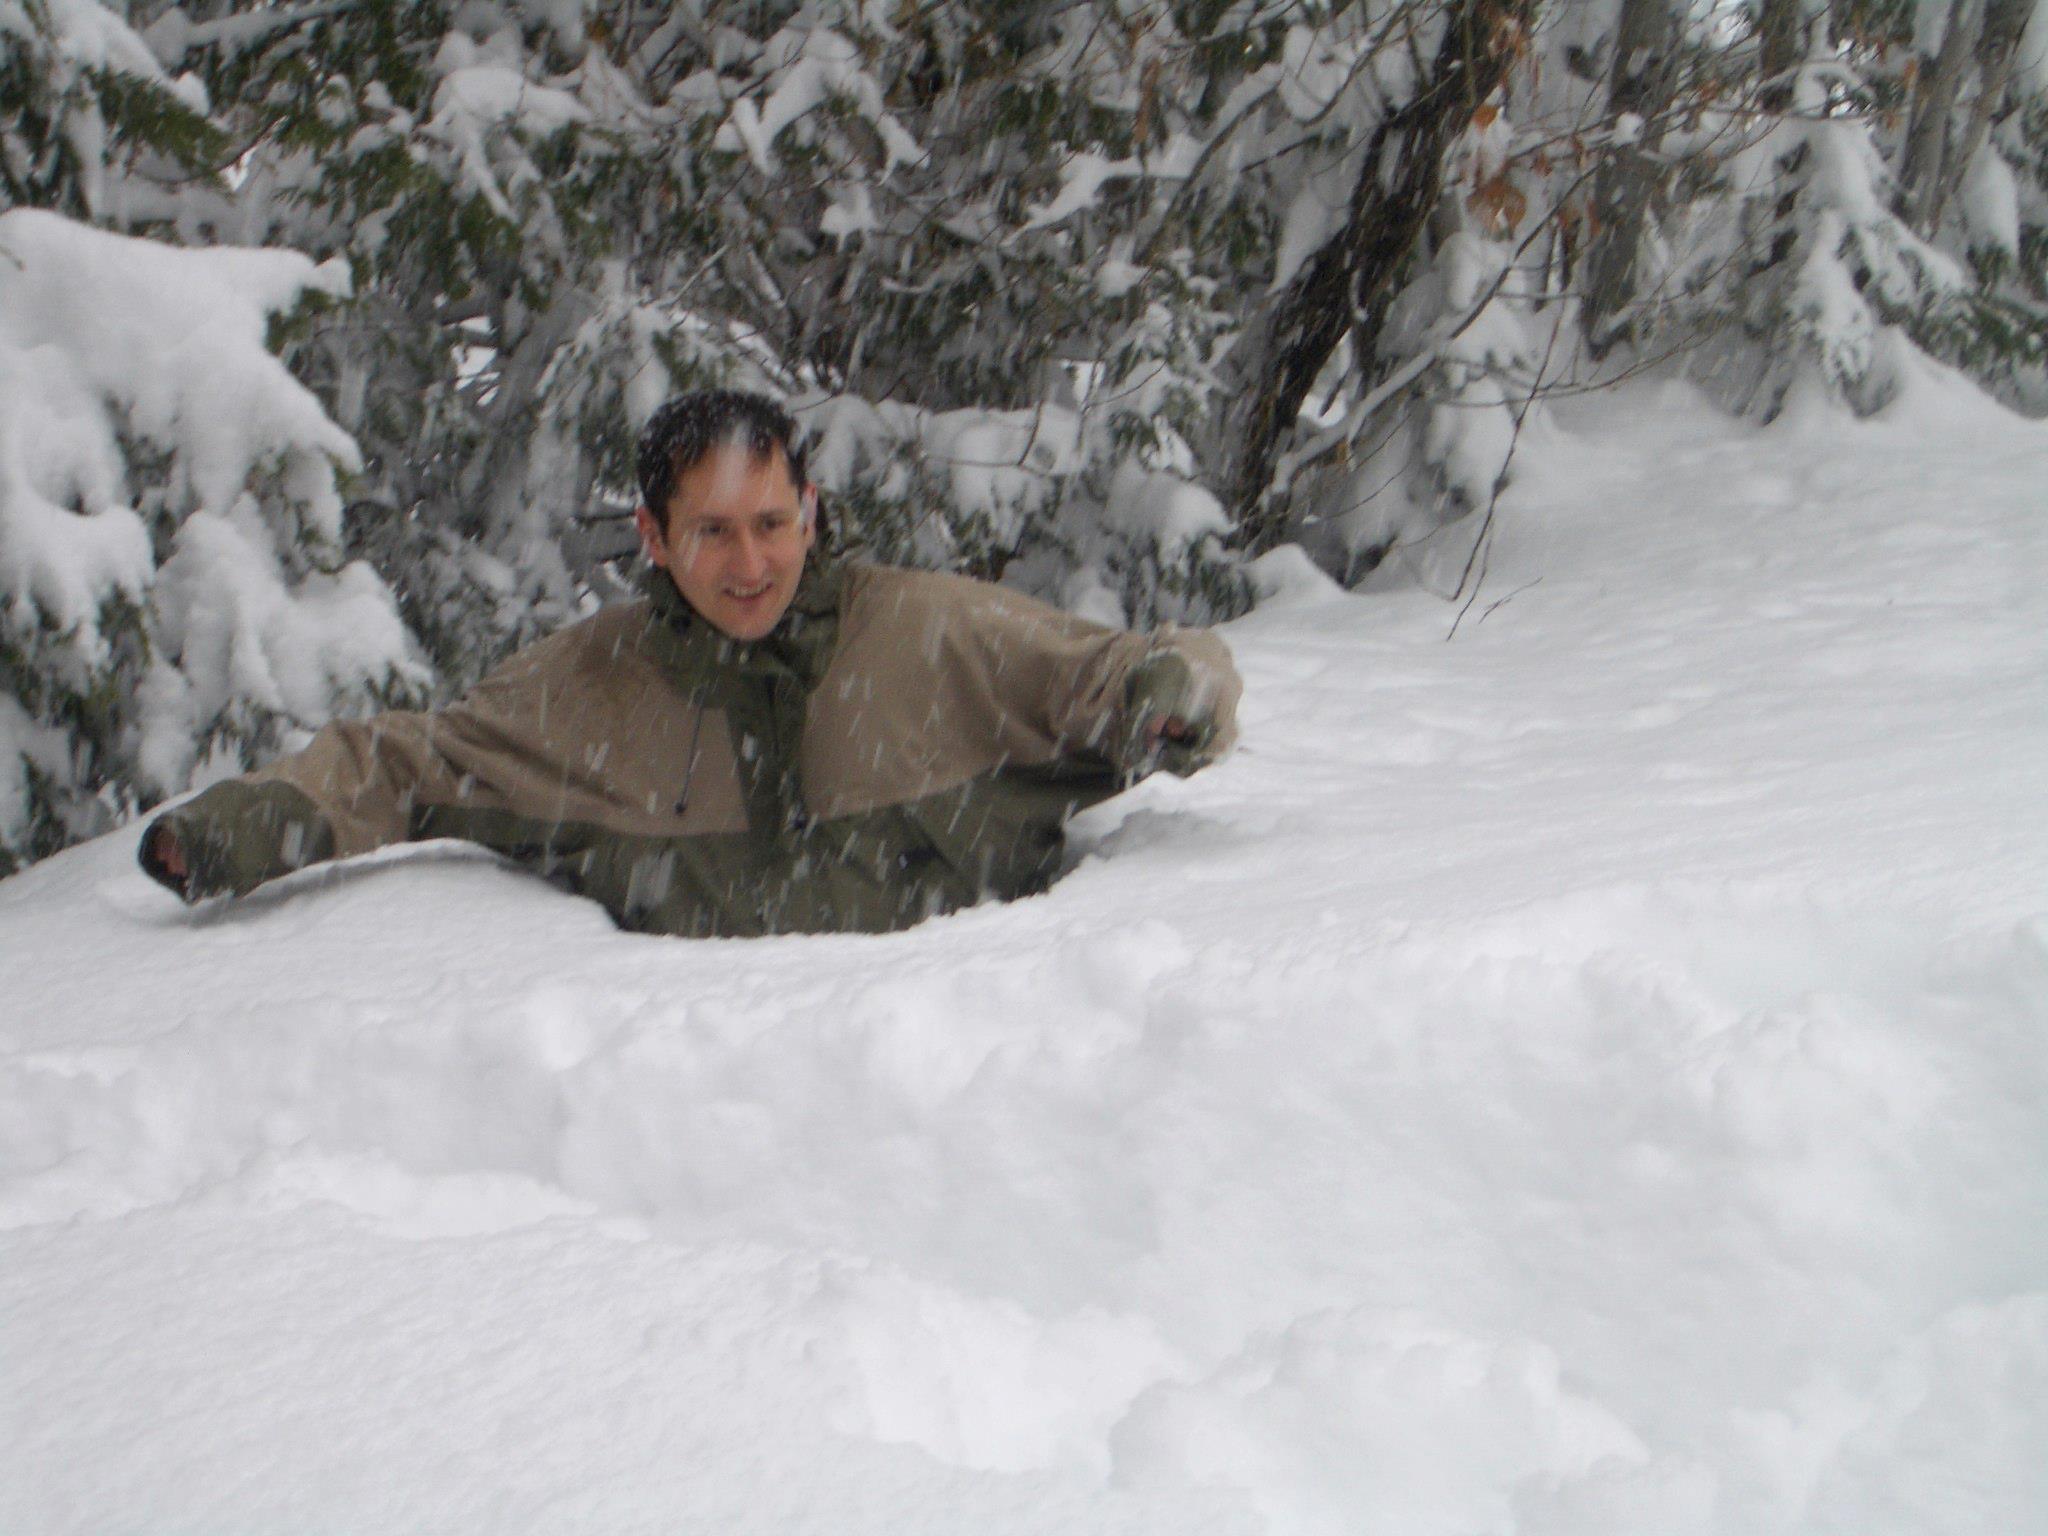 Dan in a snow pile in Tahoe